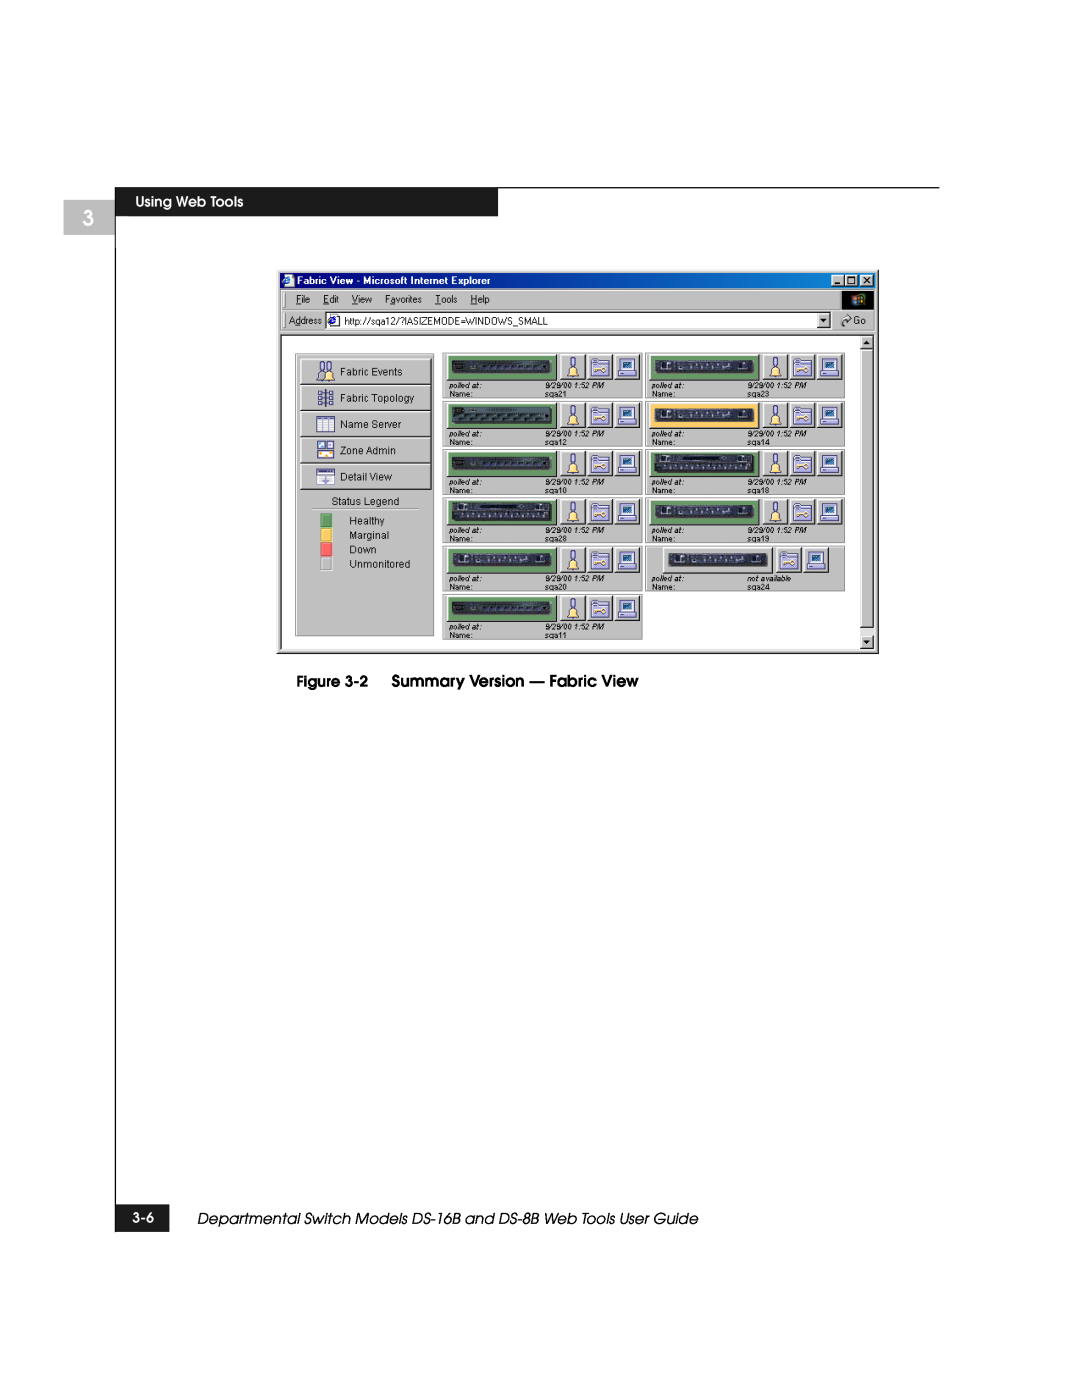 EMC DS-8B manual 2 Summary Version - Fabric View, Using Web Tools 